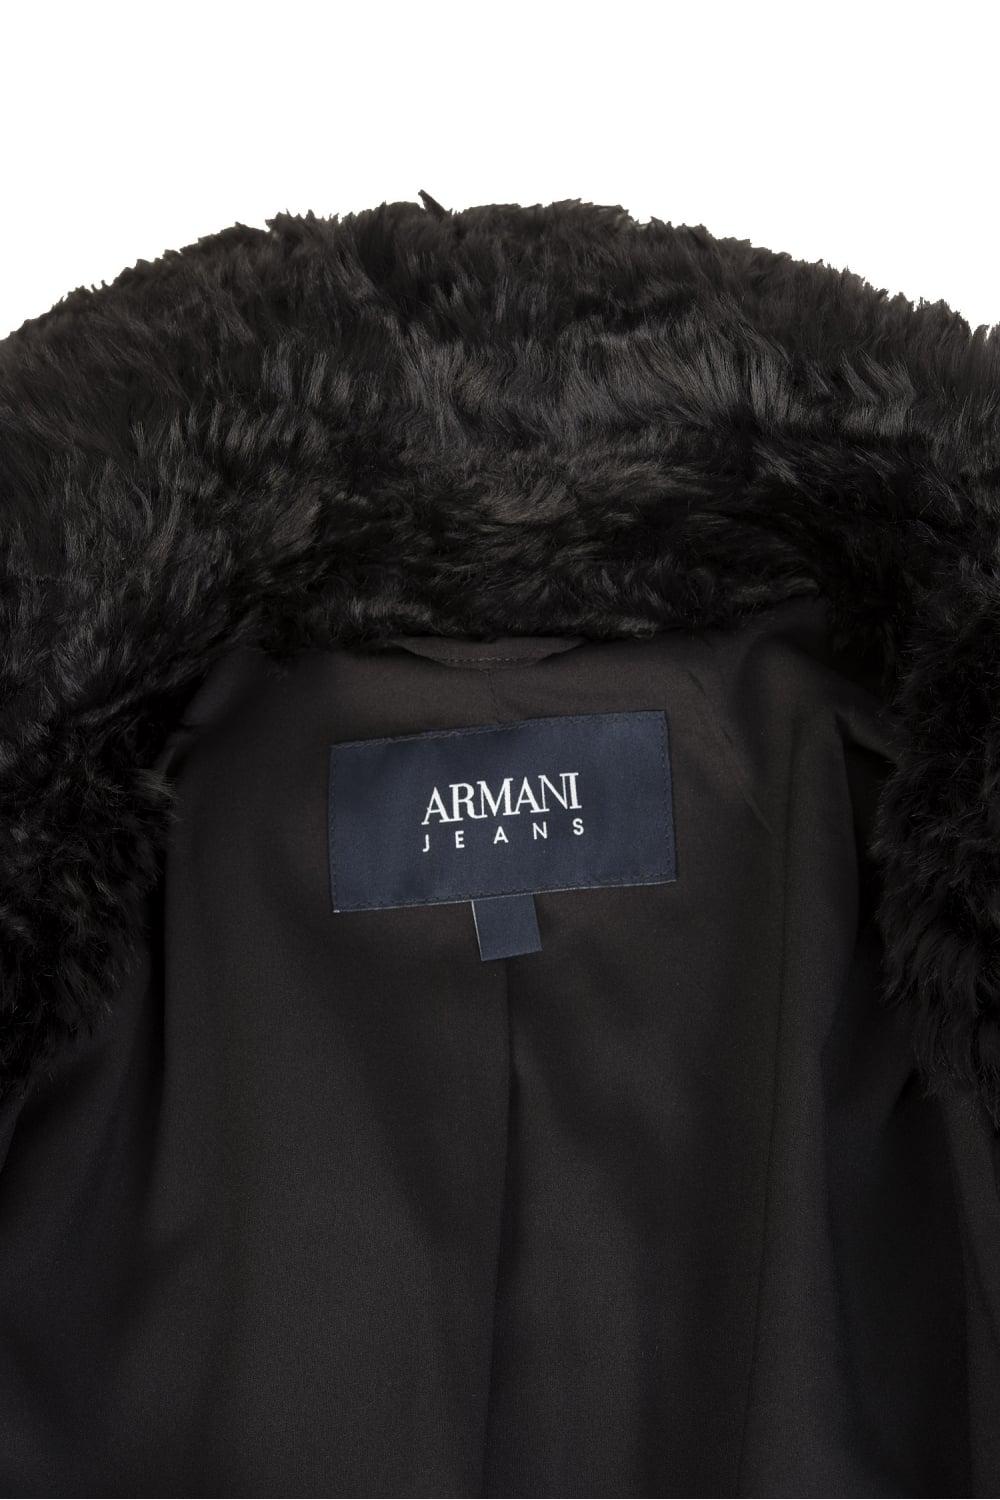 armani jeans womens jacket